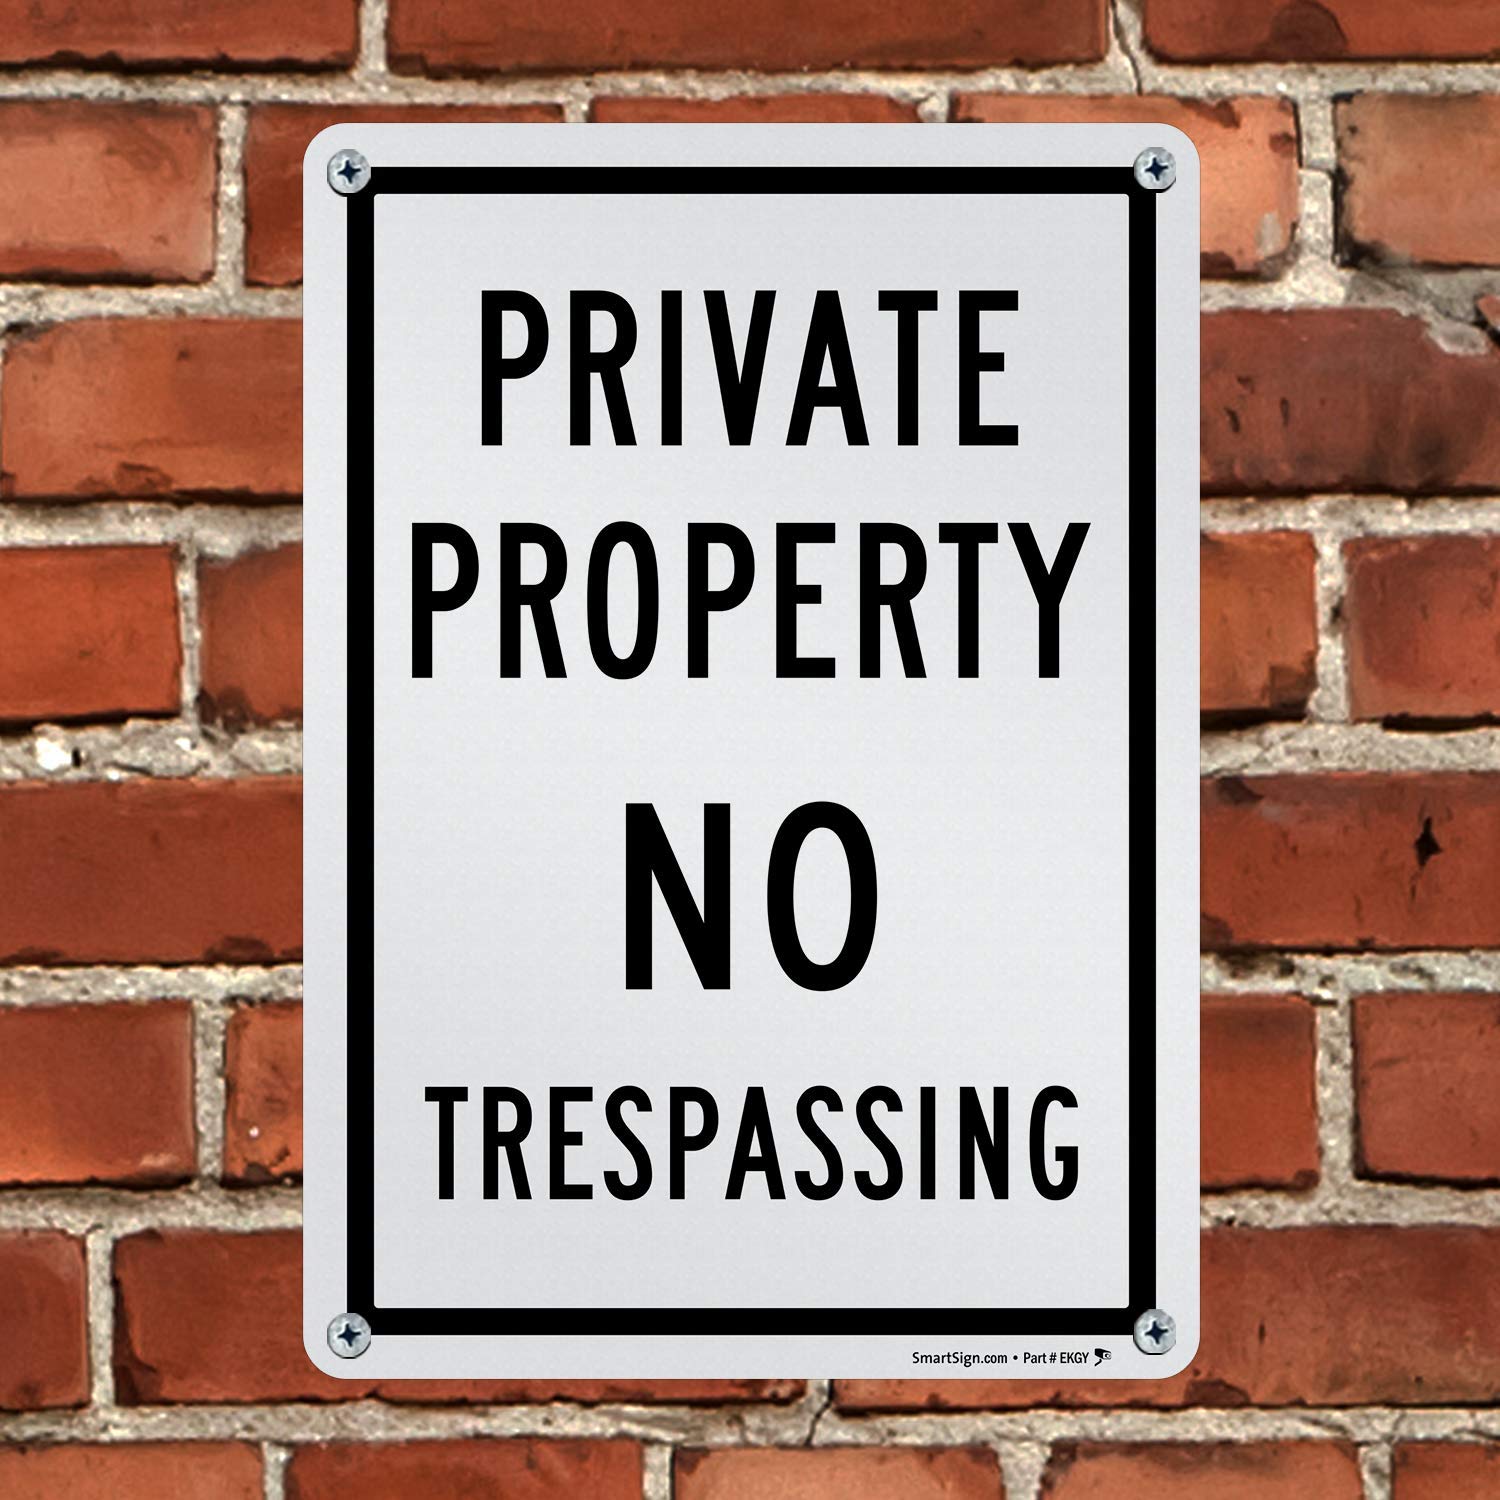 SmartSign “Private Property - No Trespassing” Sign | 10" x 14" Engineer Grade Reflective Aluminum